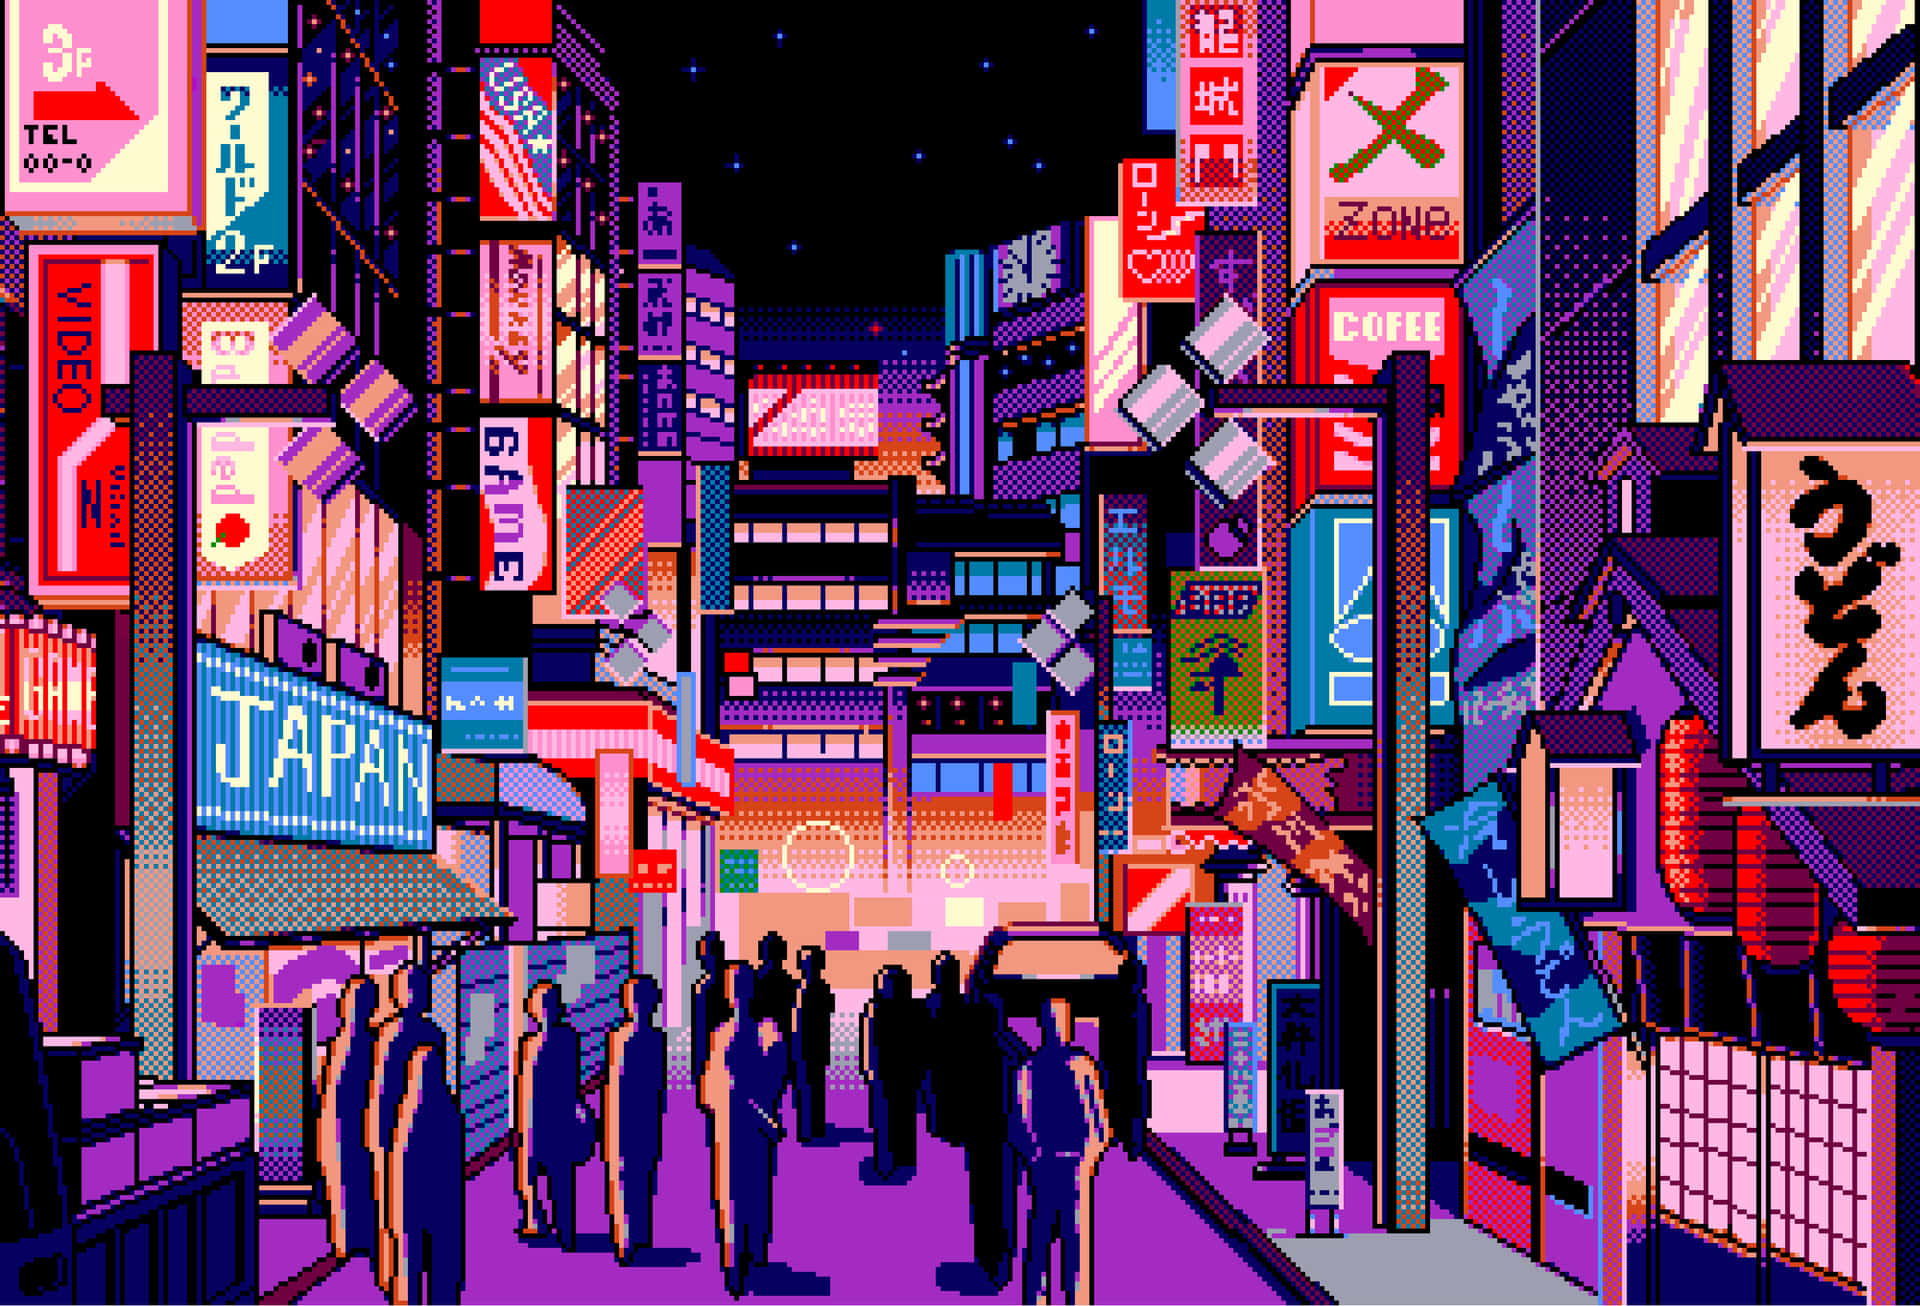 Ciudadfuturista Concurrida En Estilo Pixel Art Cyberpunk. Fondo de pantalla